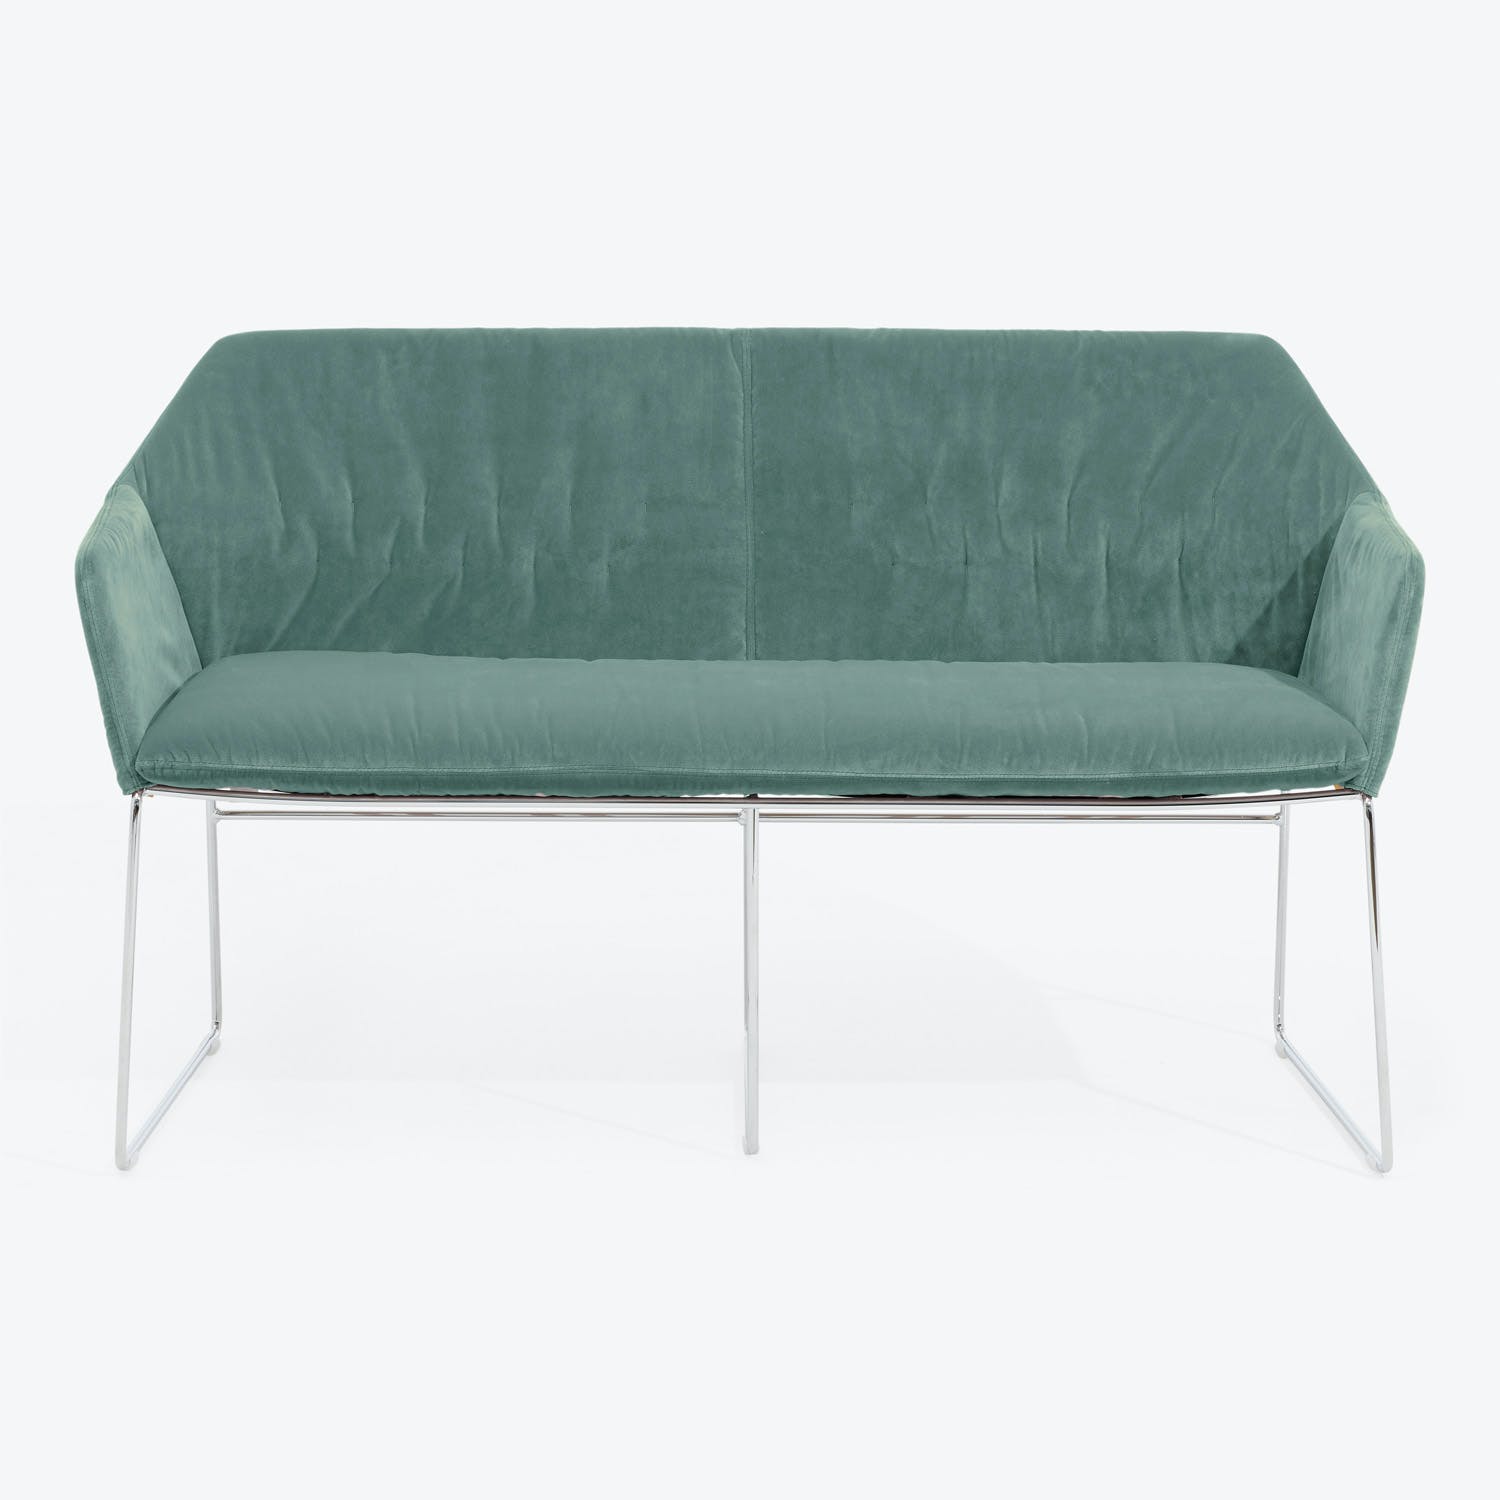 Modern green velvet sofa with sleek metallic legs exudes luxury.